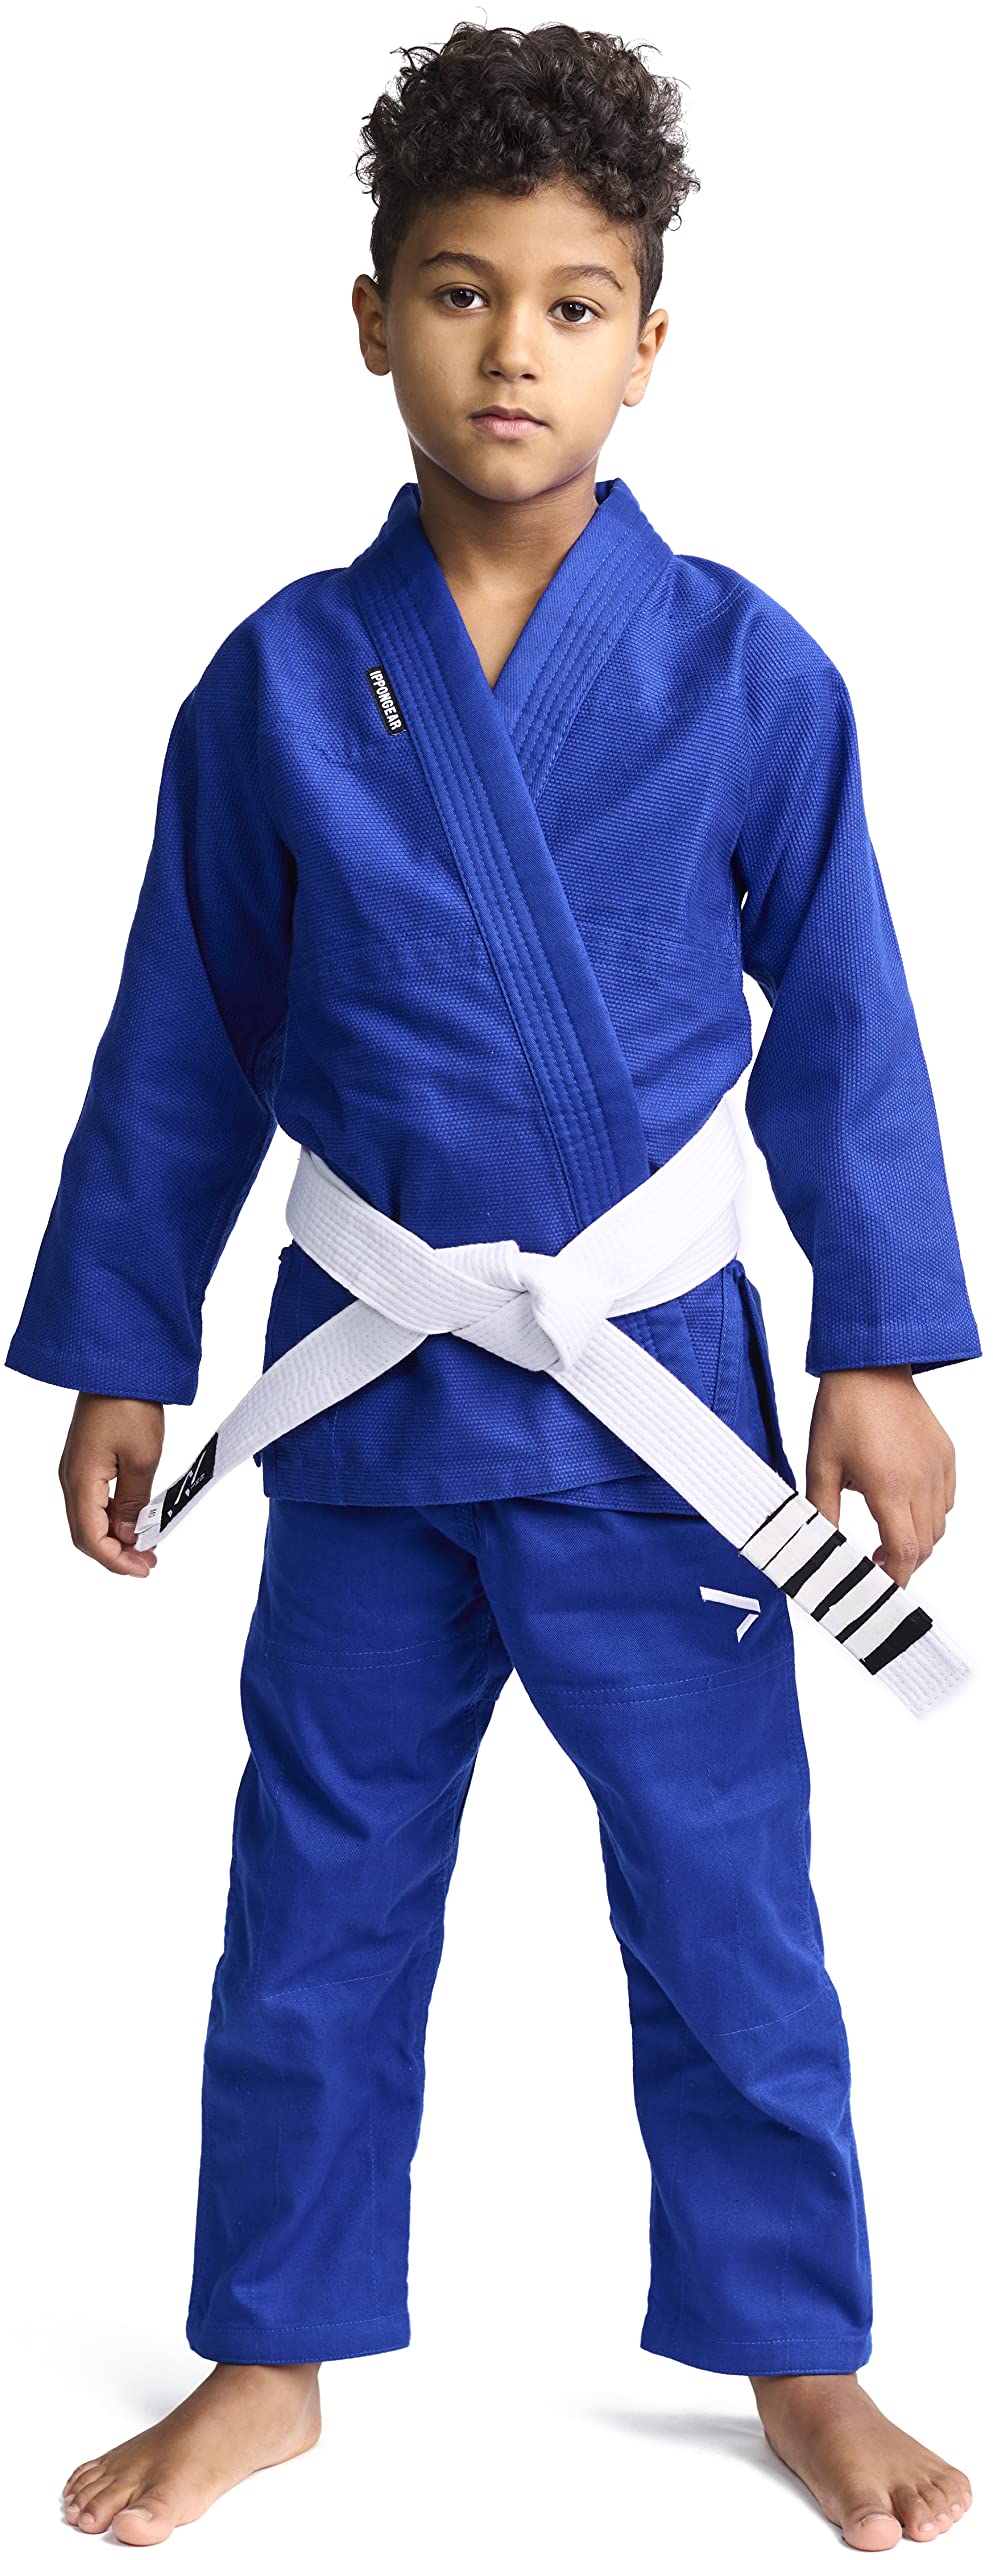 IPPONGEAR Brazilian Jiu Jitsu Kinder/Einsteiger Anzug inkl weißem Gürtel [M3 I Pearl-Weave Material I 350gr/m² Stoffdichte I Reißfest] blau